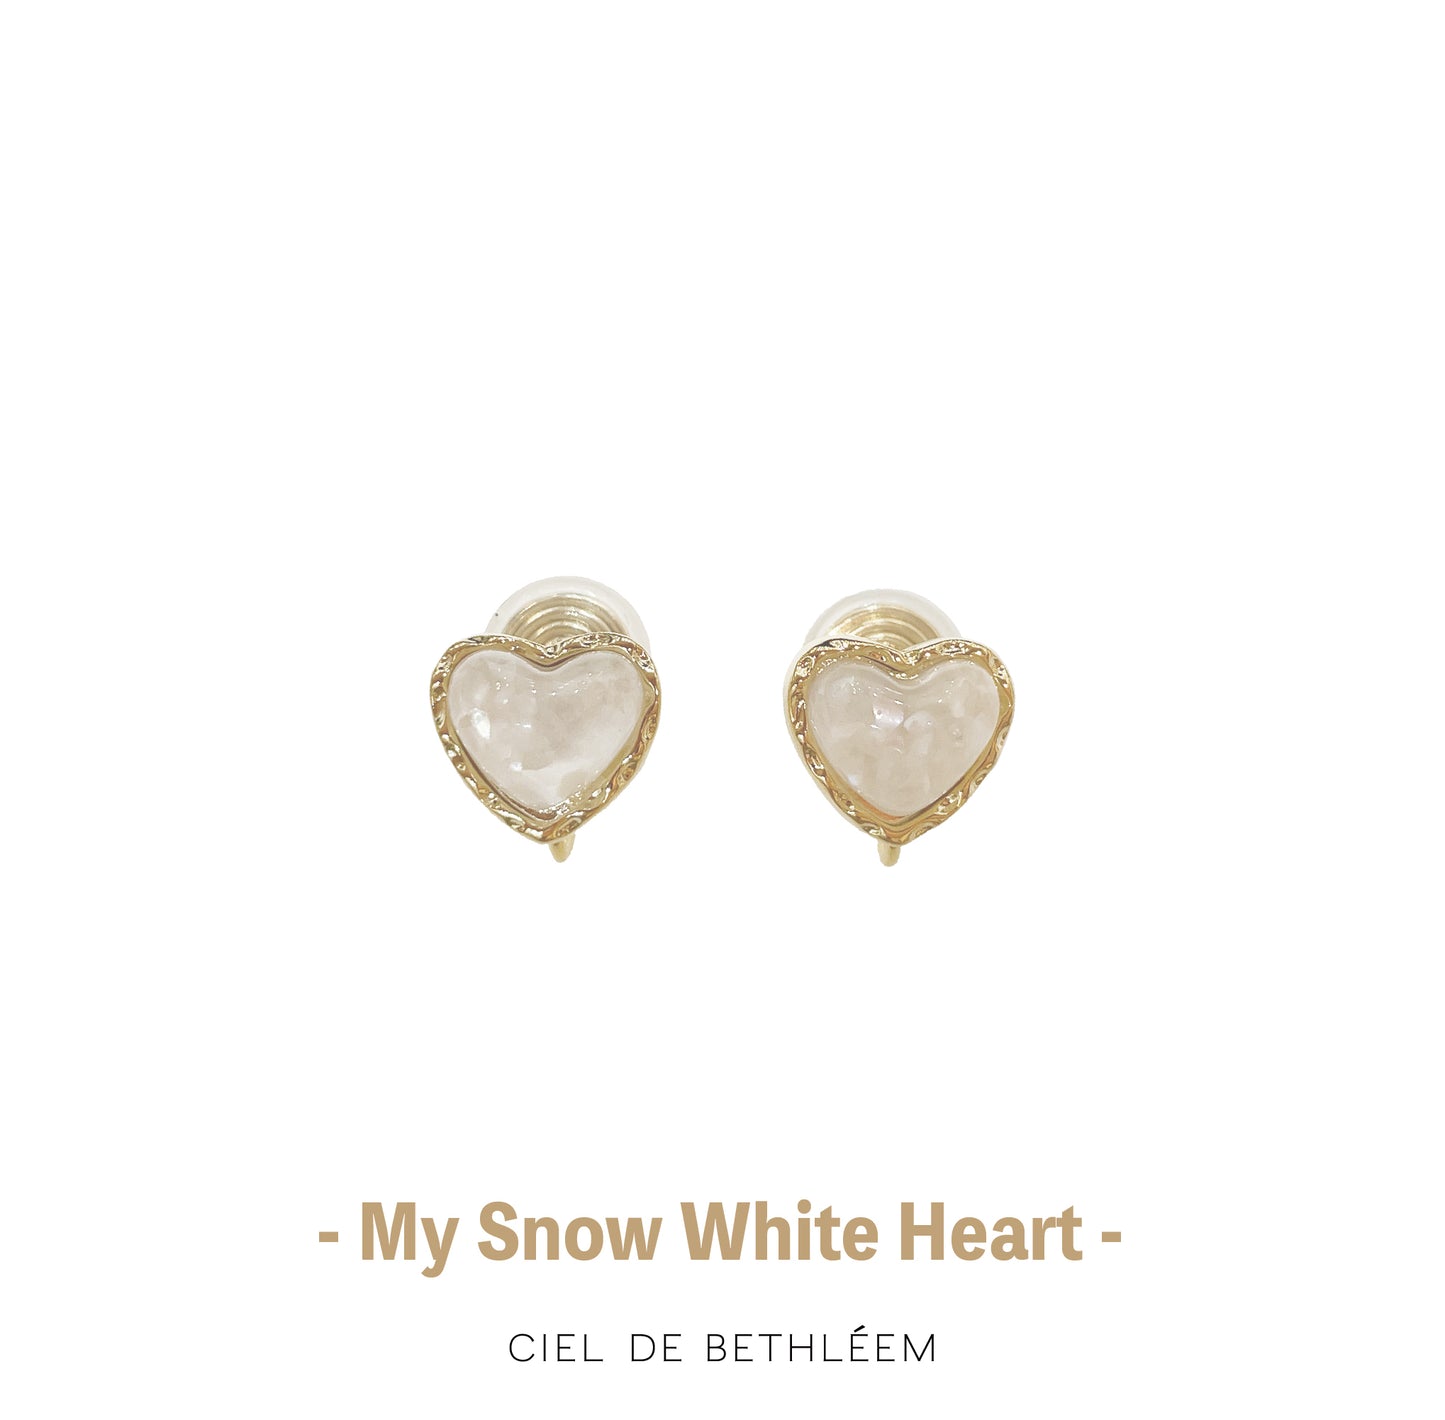 My Snow White Heart